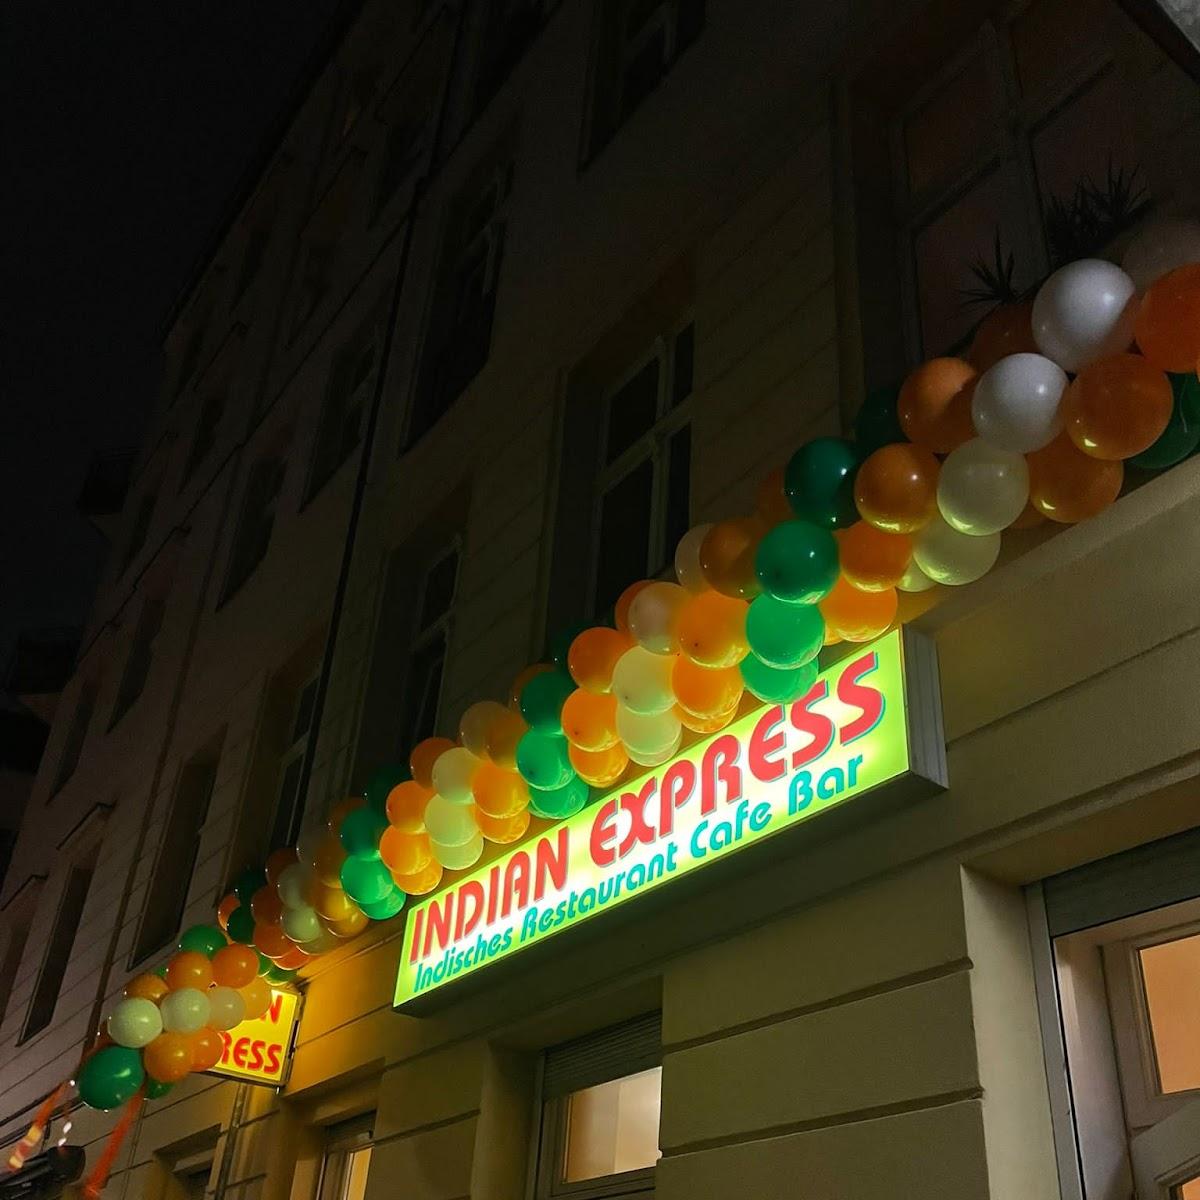 Restaurant "Indian Express" in Berlin